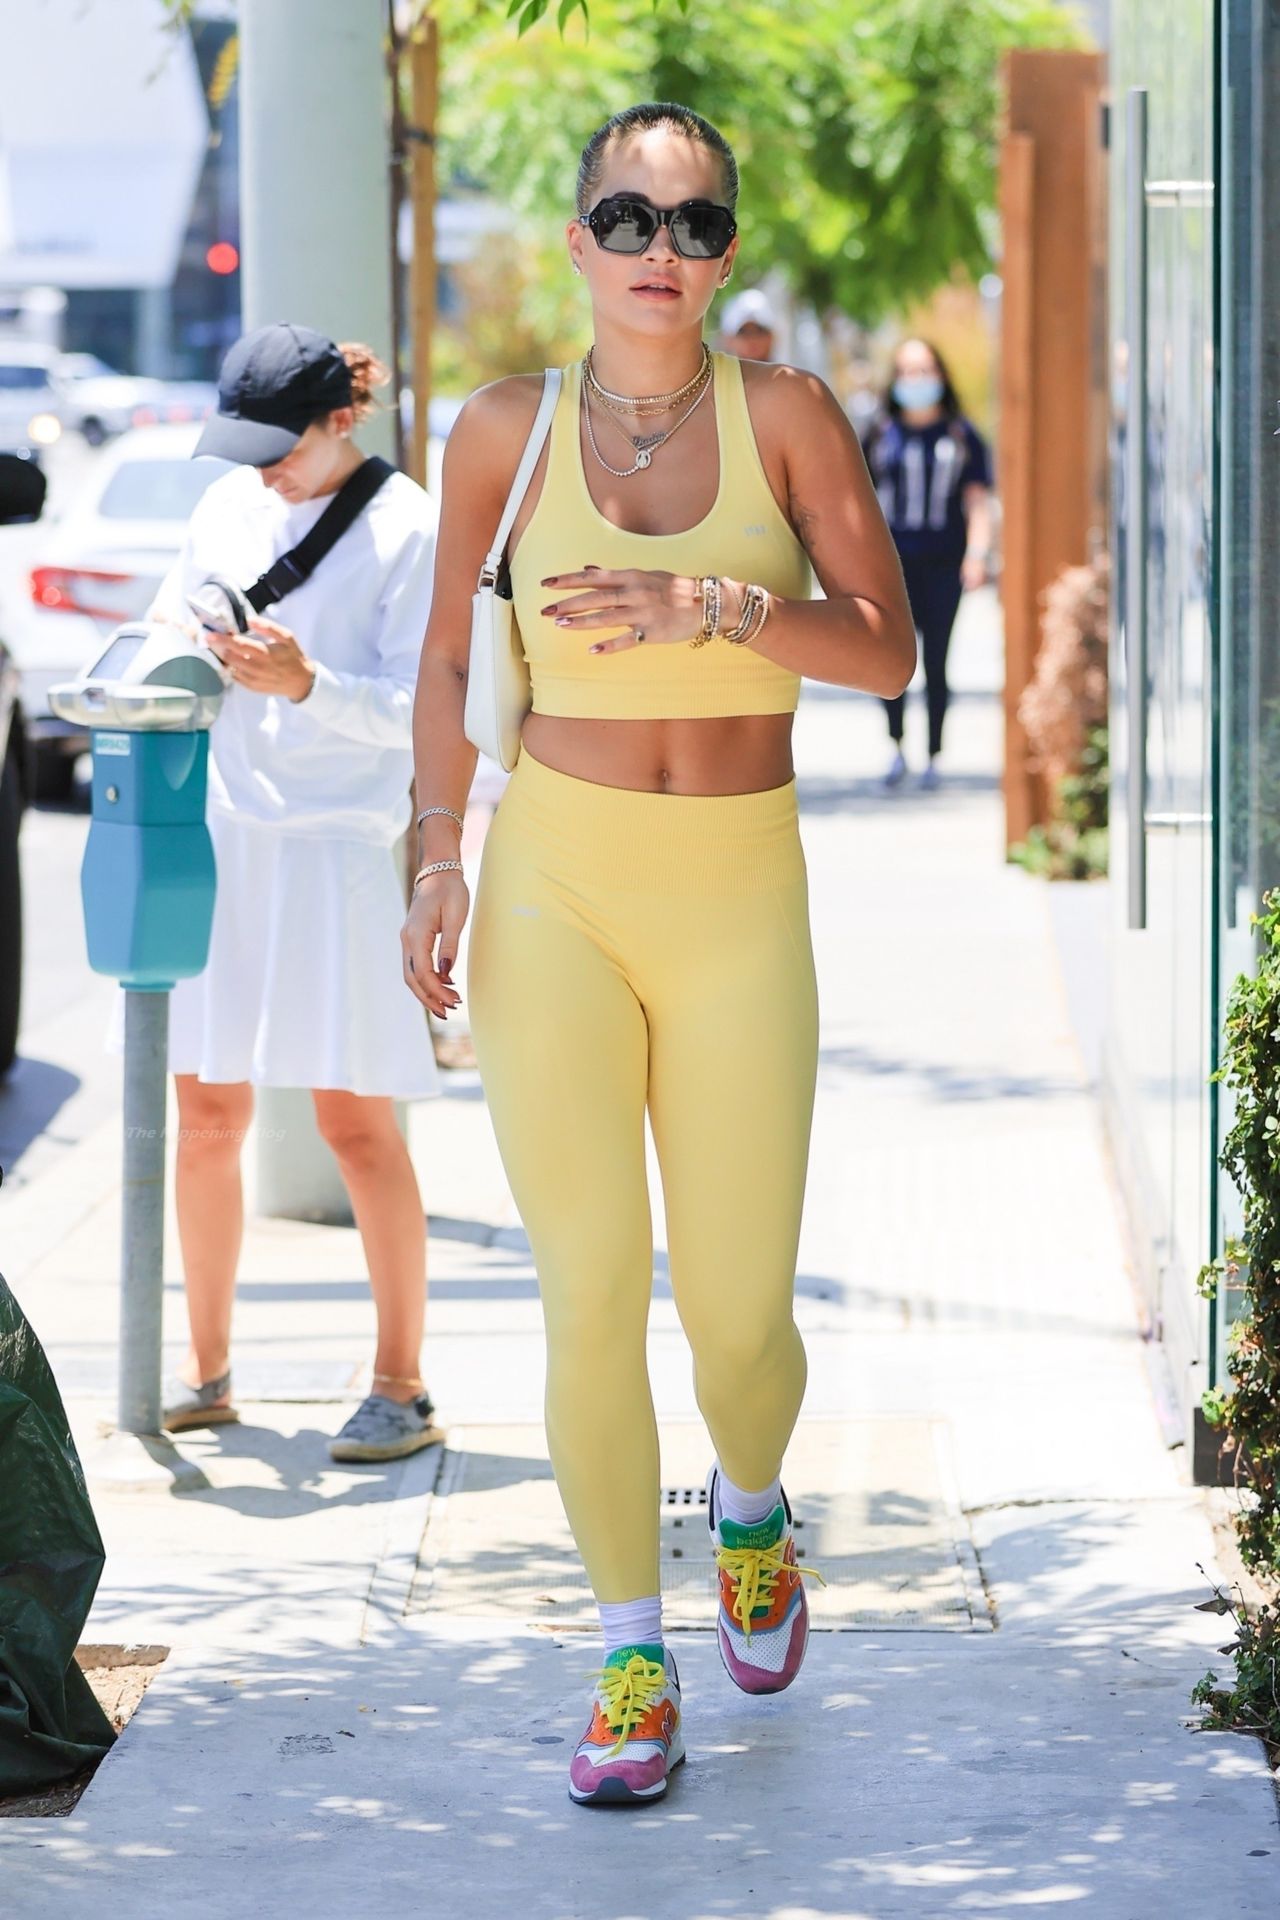 Rita Ora Flaunts Her Sensational Physique in All Yellow Gym Wear (44 Photos)